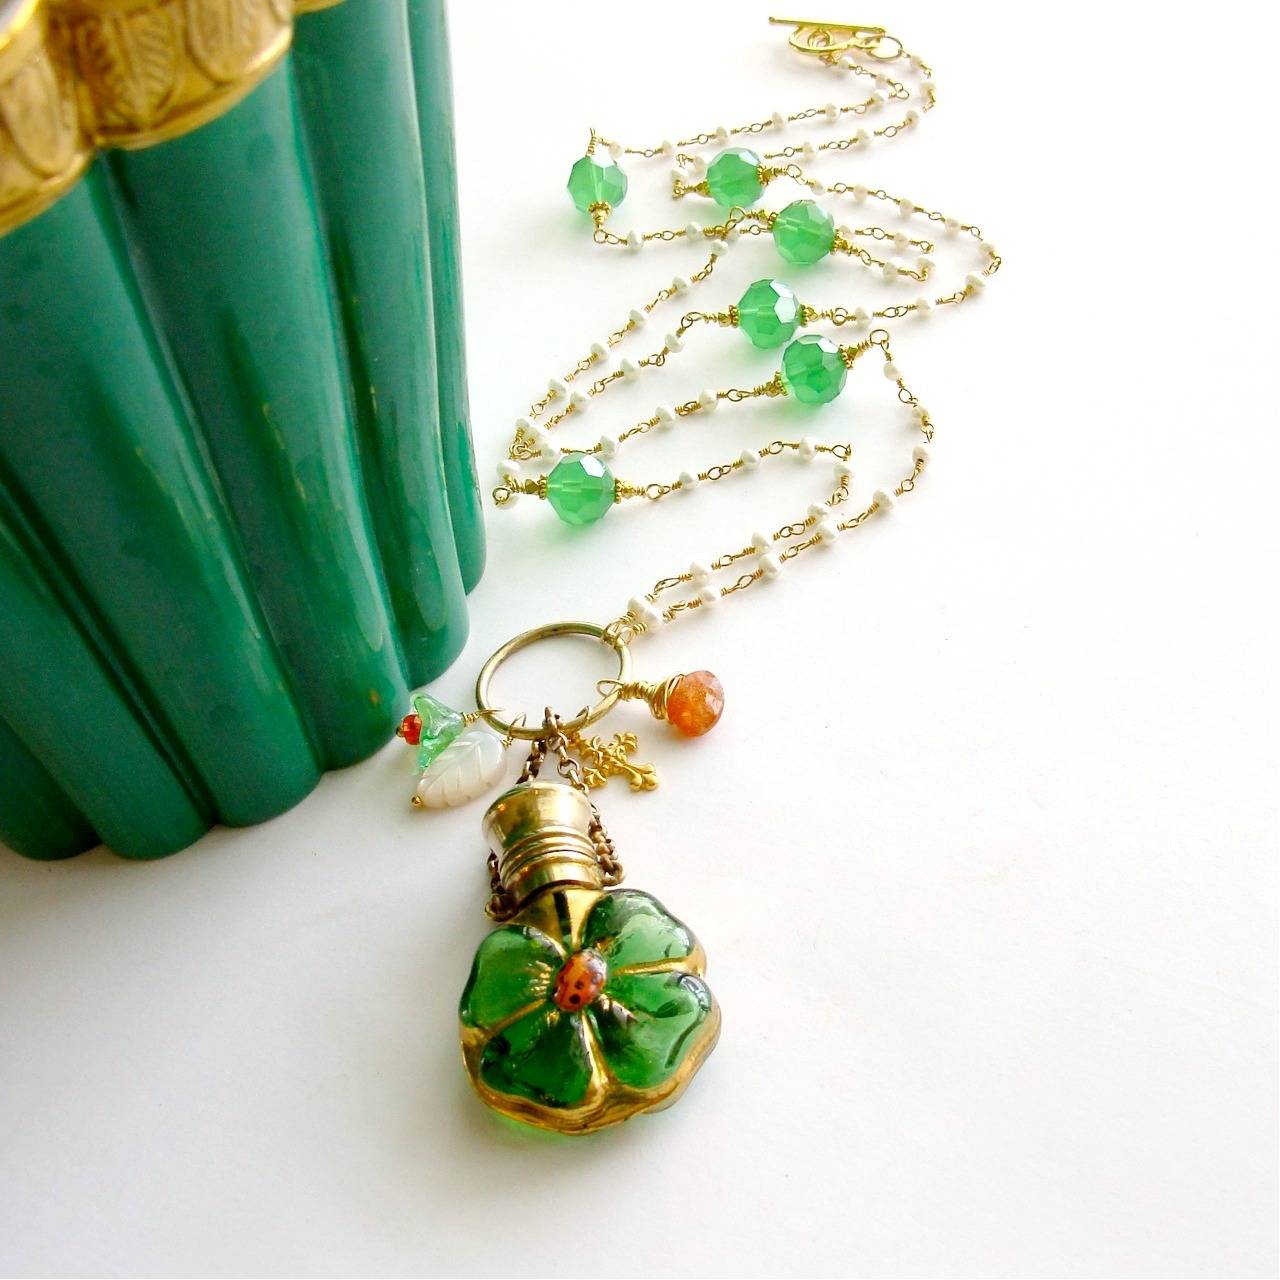 Women's Victorian Four Leaf Clover Ladybug Glass Scent Bottle Necklace